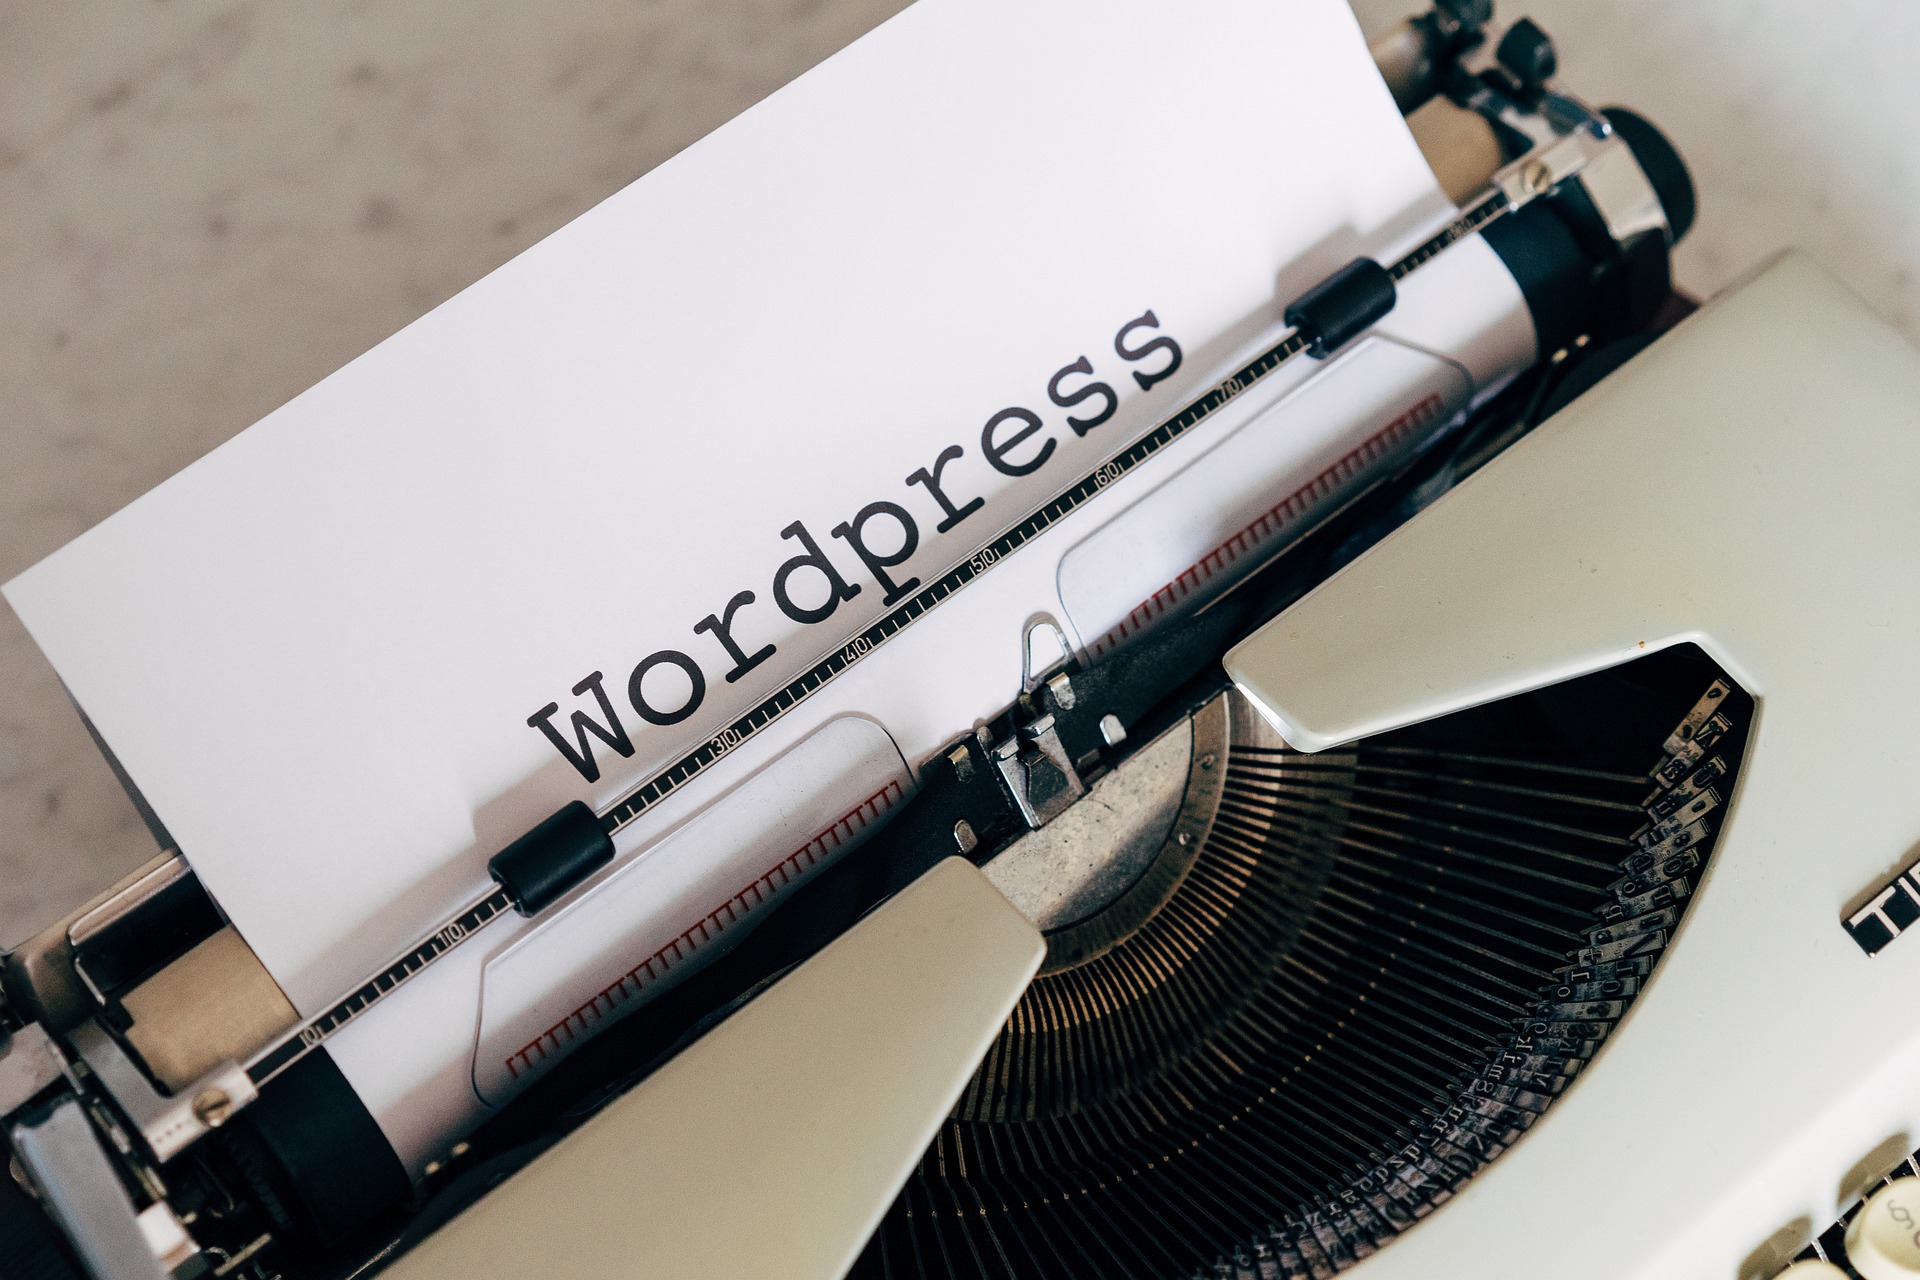 Mechanical typewriter typed WordPress on a blank paper